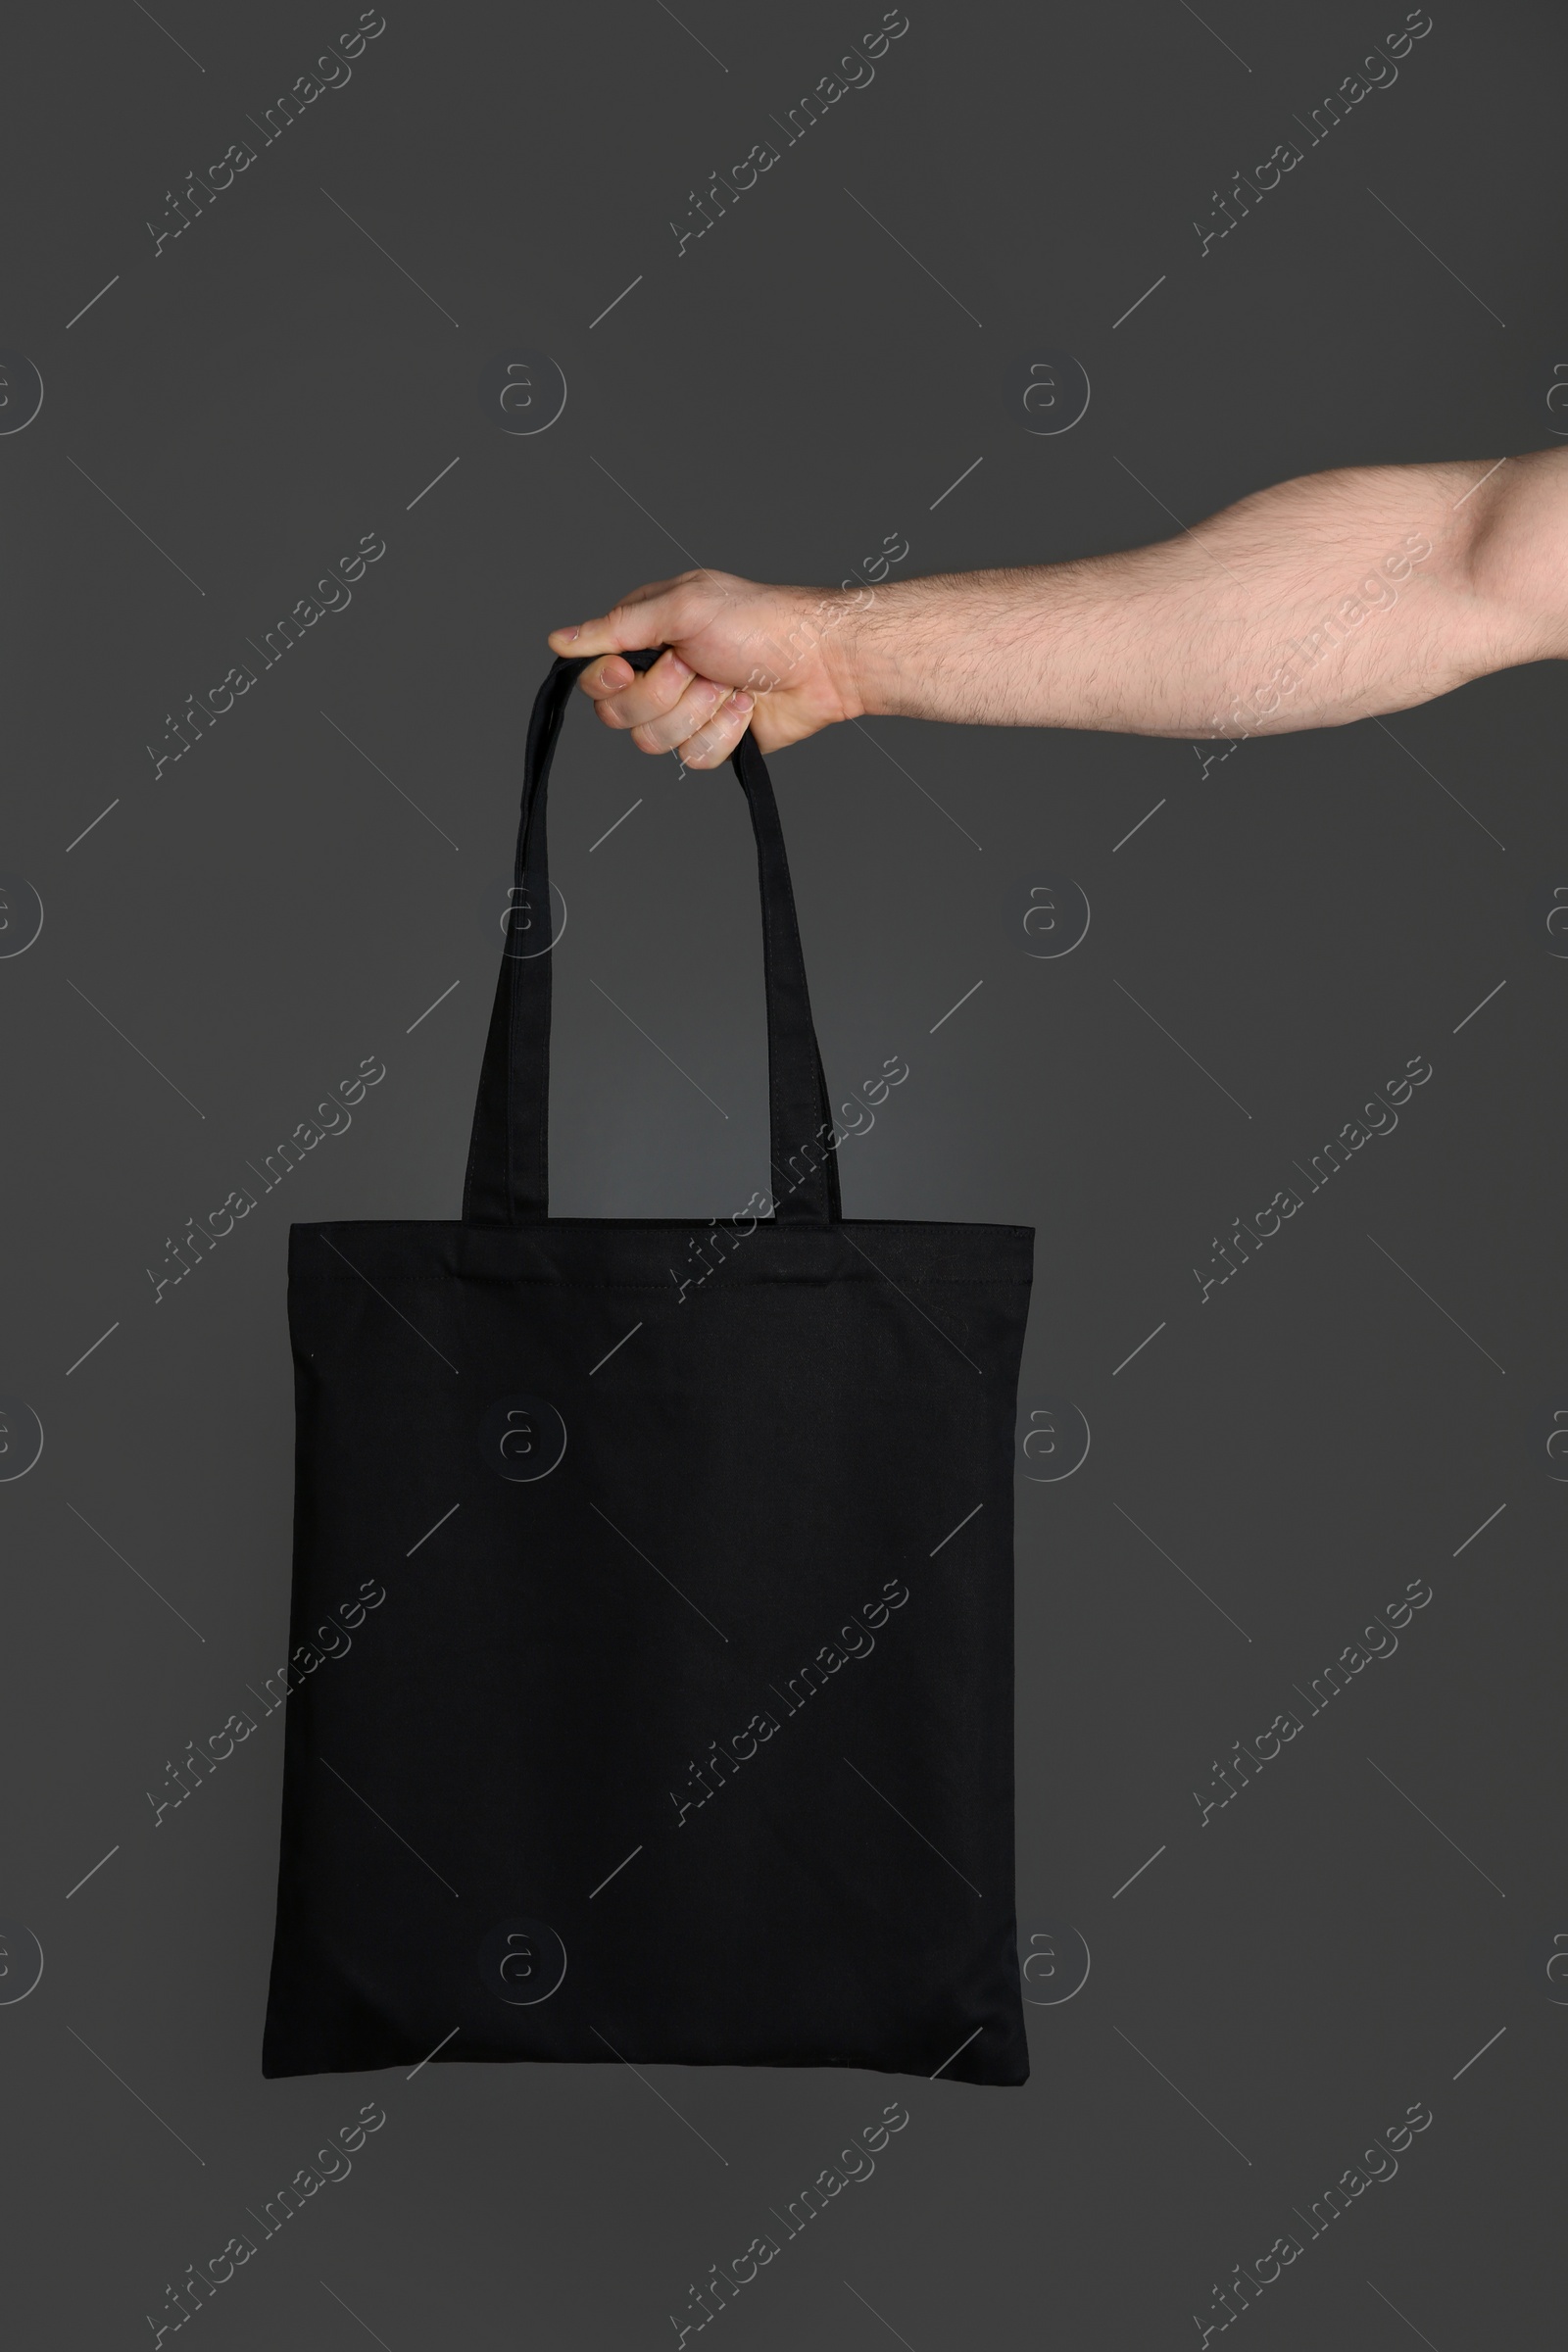 Photo of Man holding cotton shopping eco bag on grey background. Mockup for design